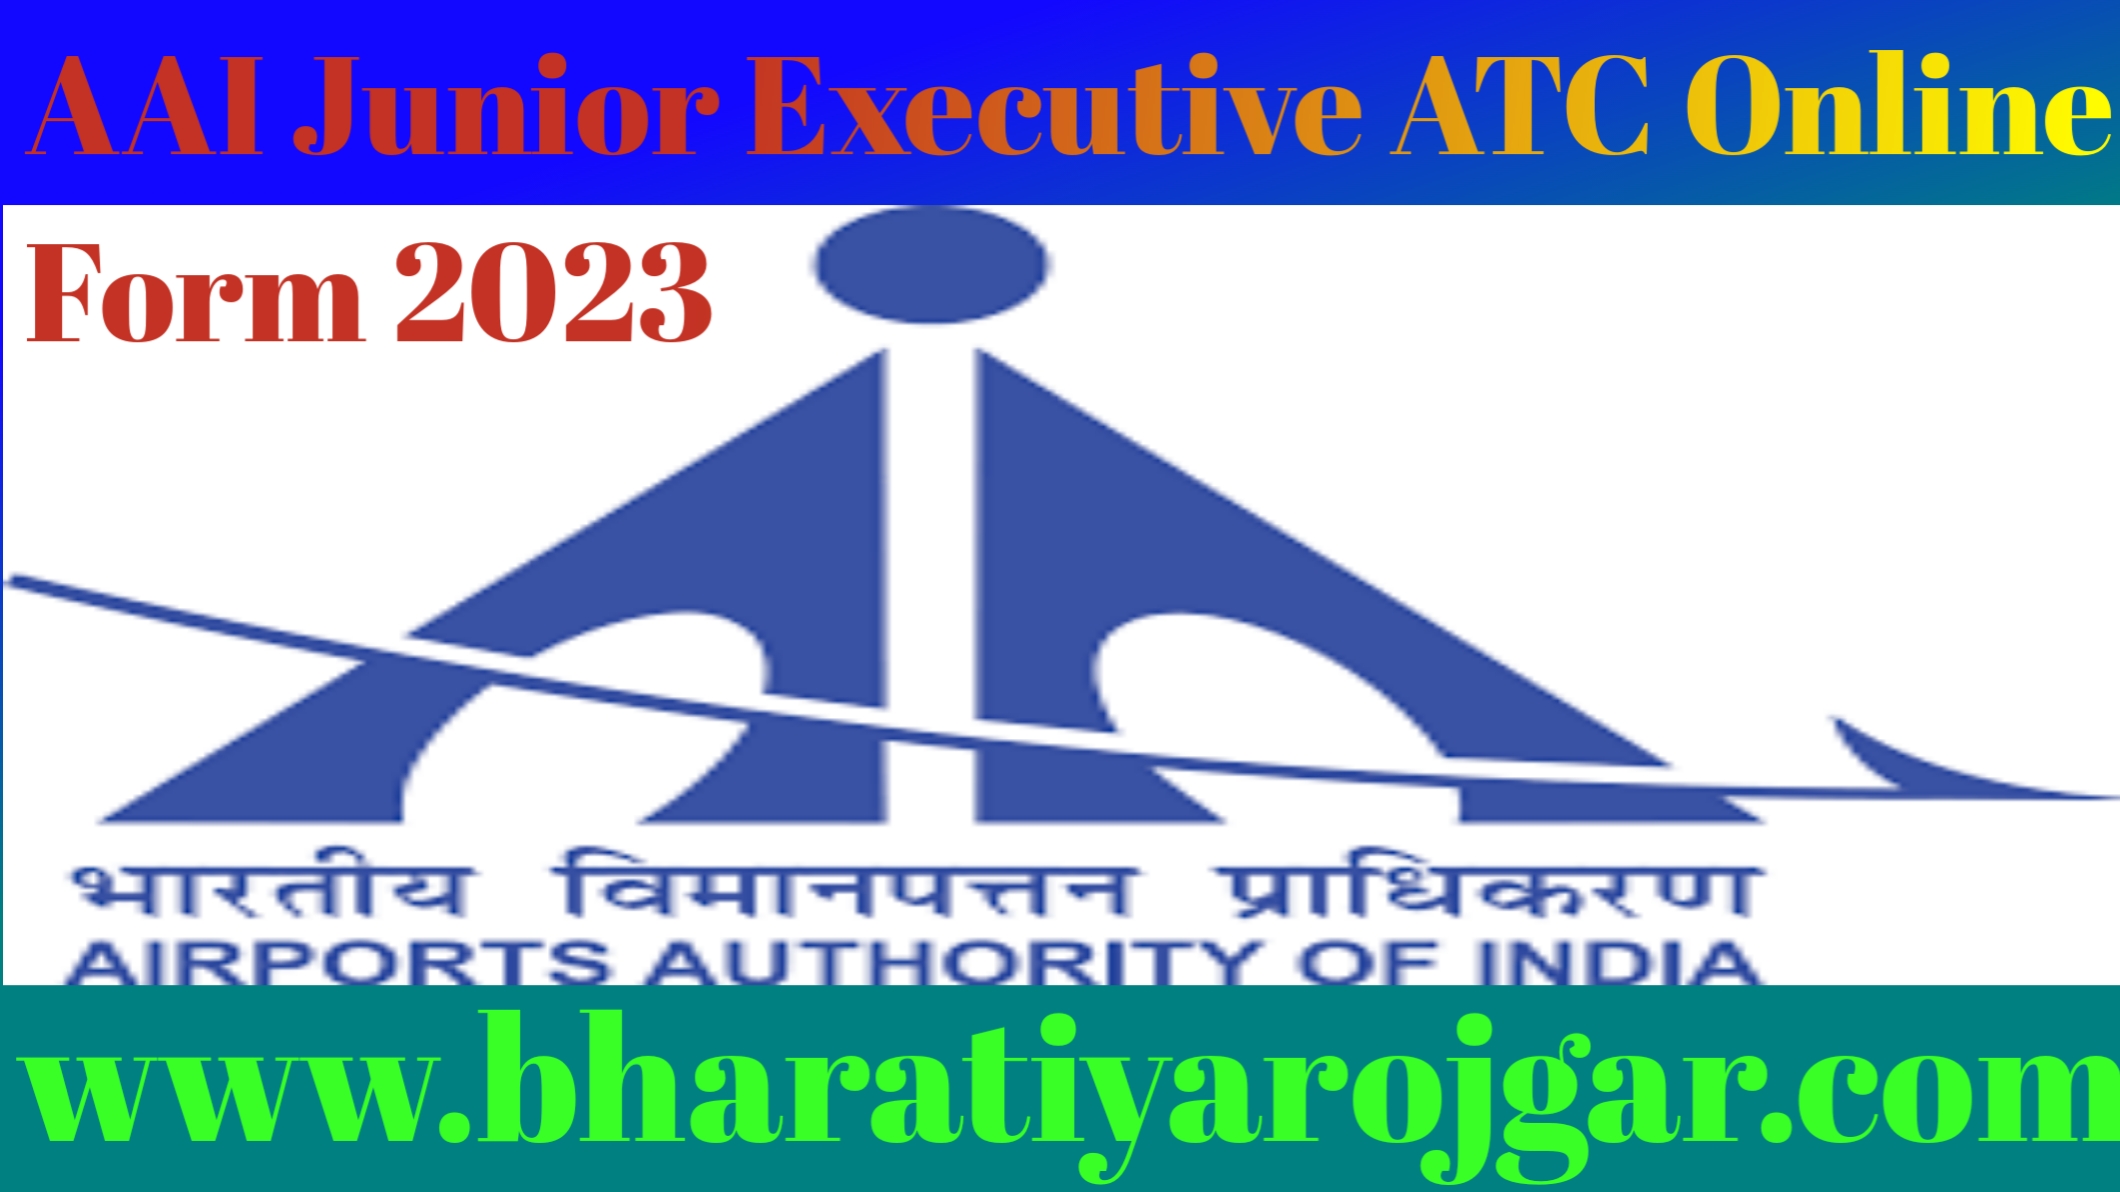 AAI Junior Executive ATC Online Form 2023